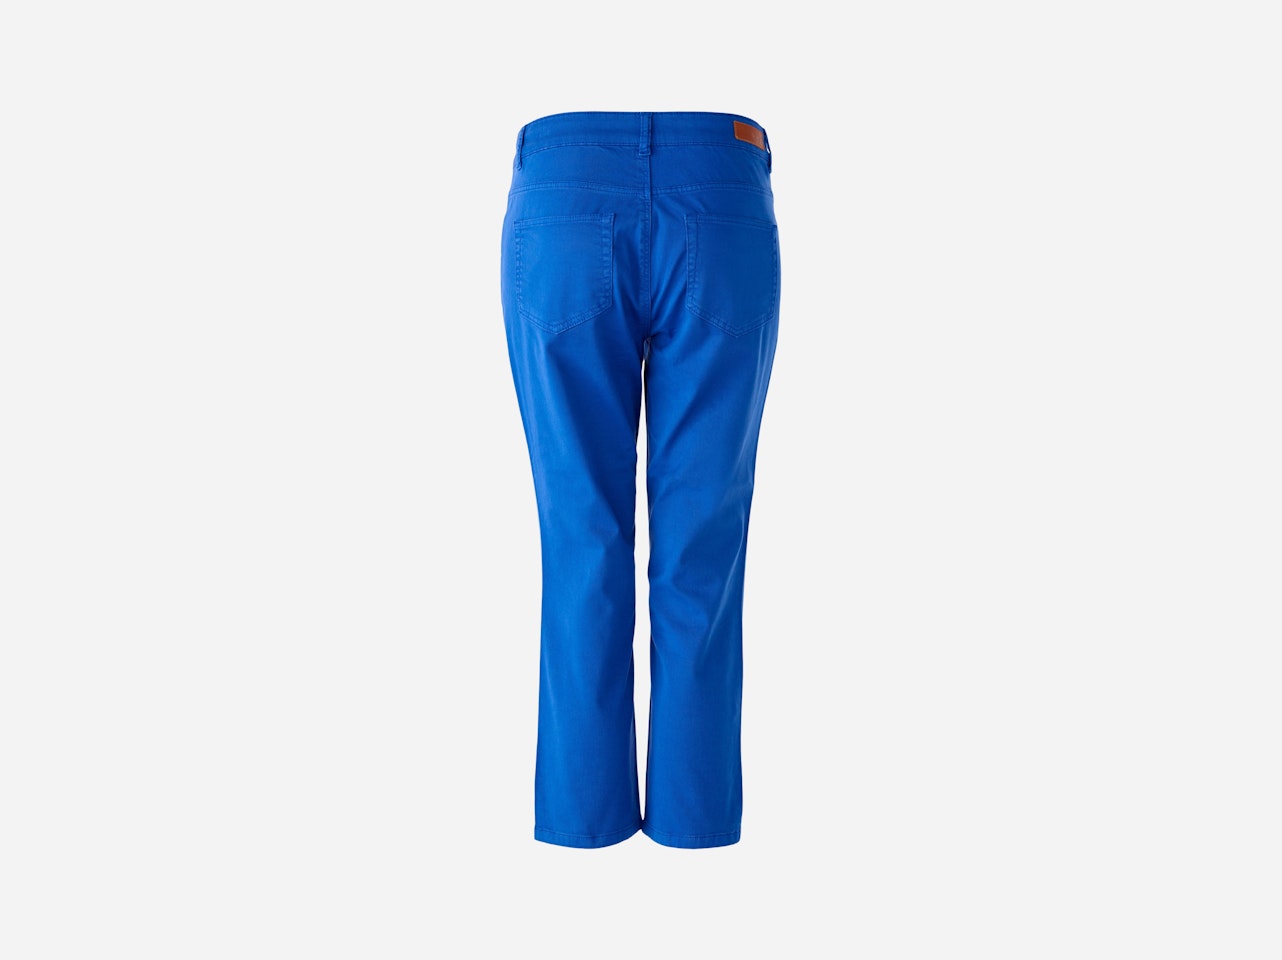 Bild 7 von Capri pants cotton stretch in blue lolite | Oui